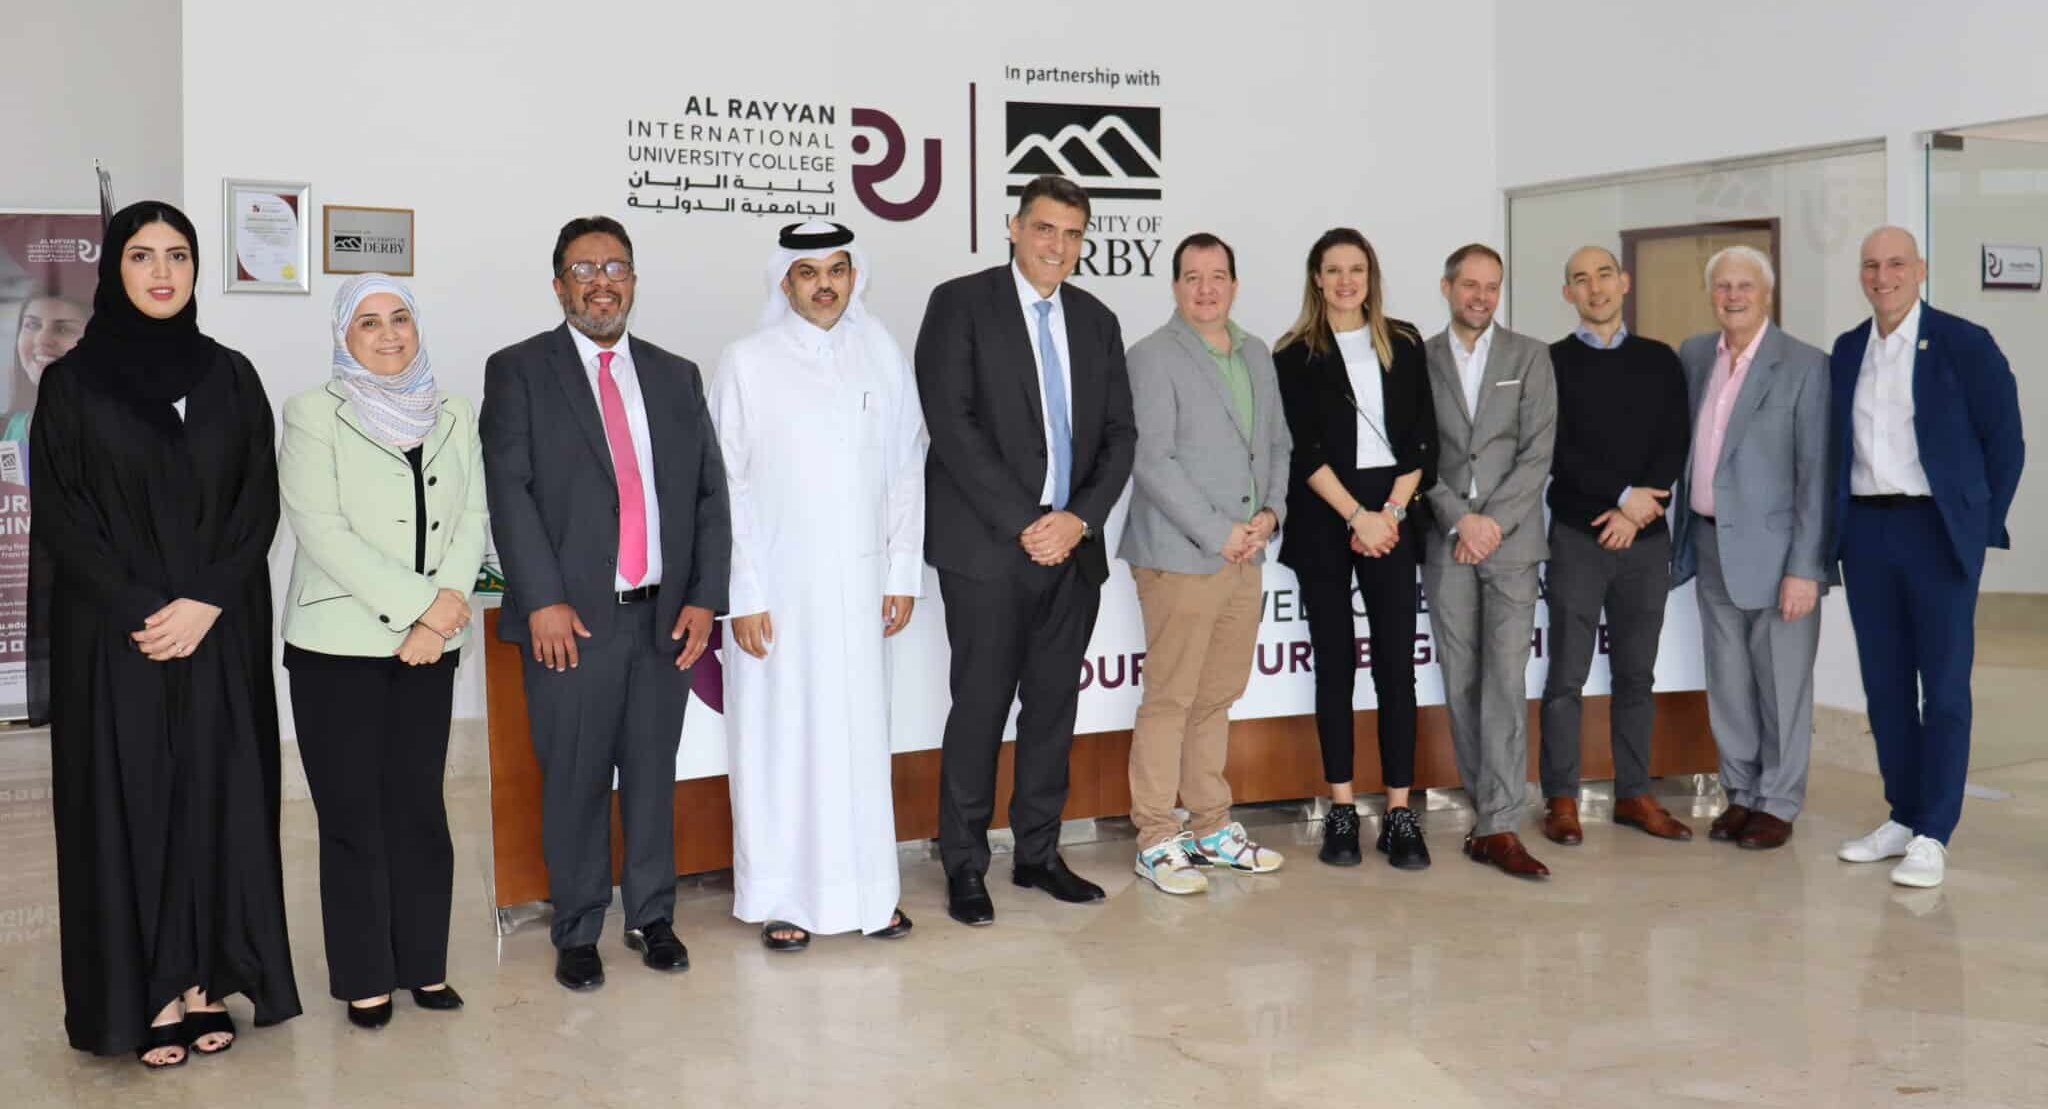 REPORT: EuroCHRIE Spring Board Meeting in Doha, Qatar 11